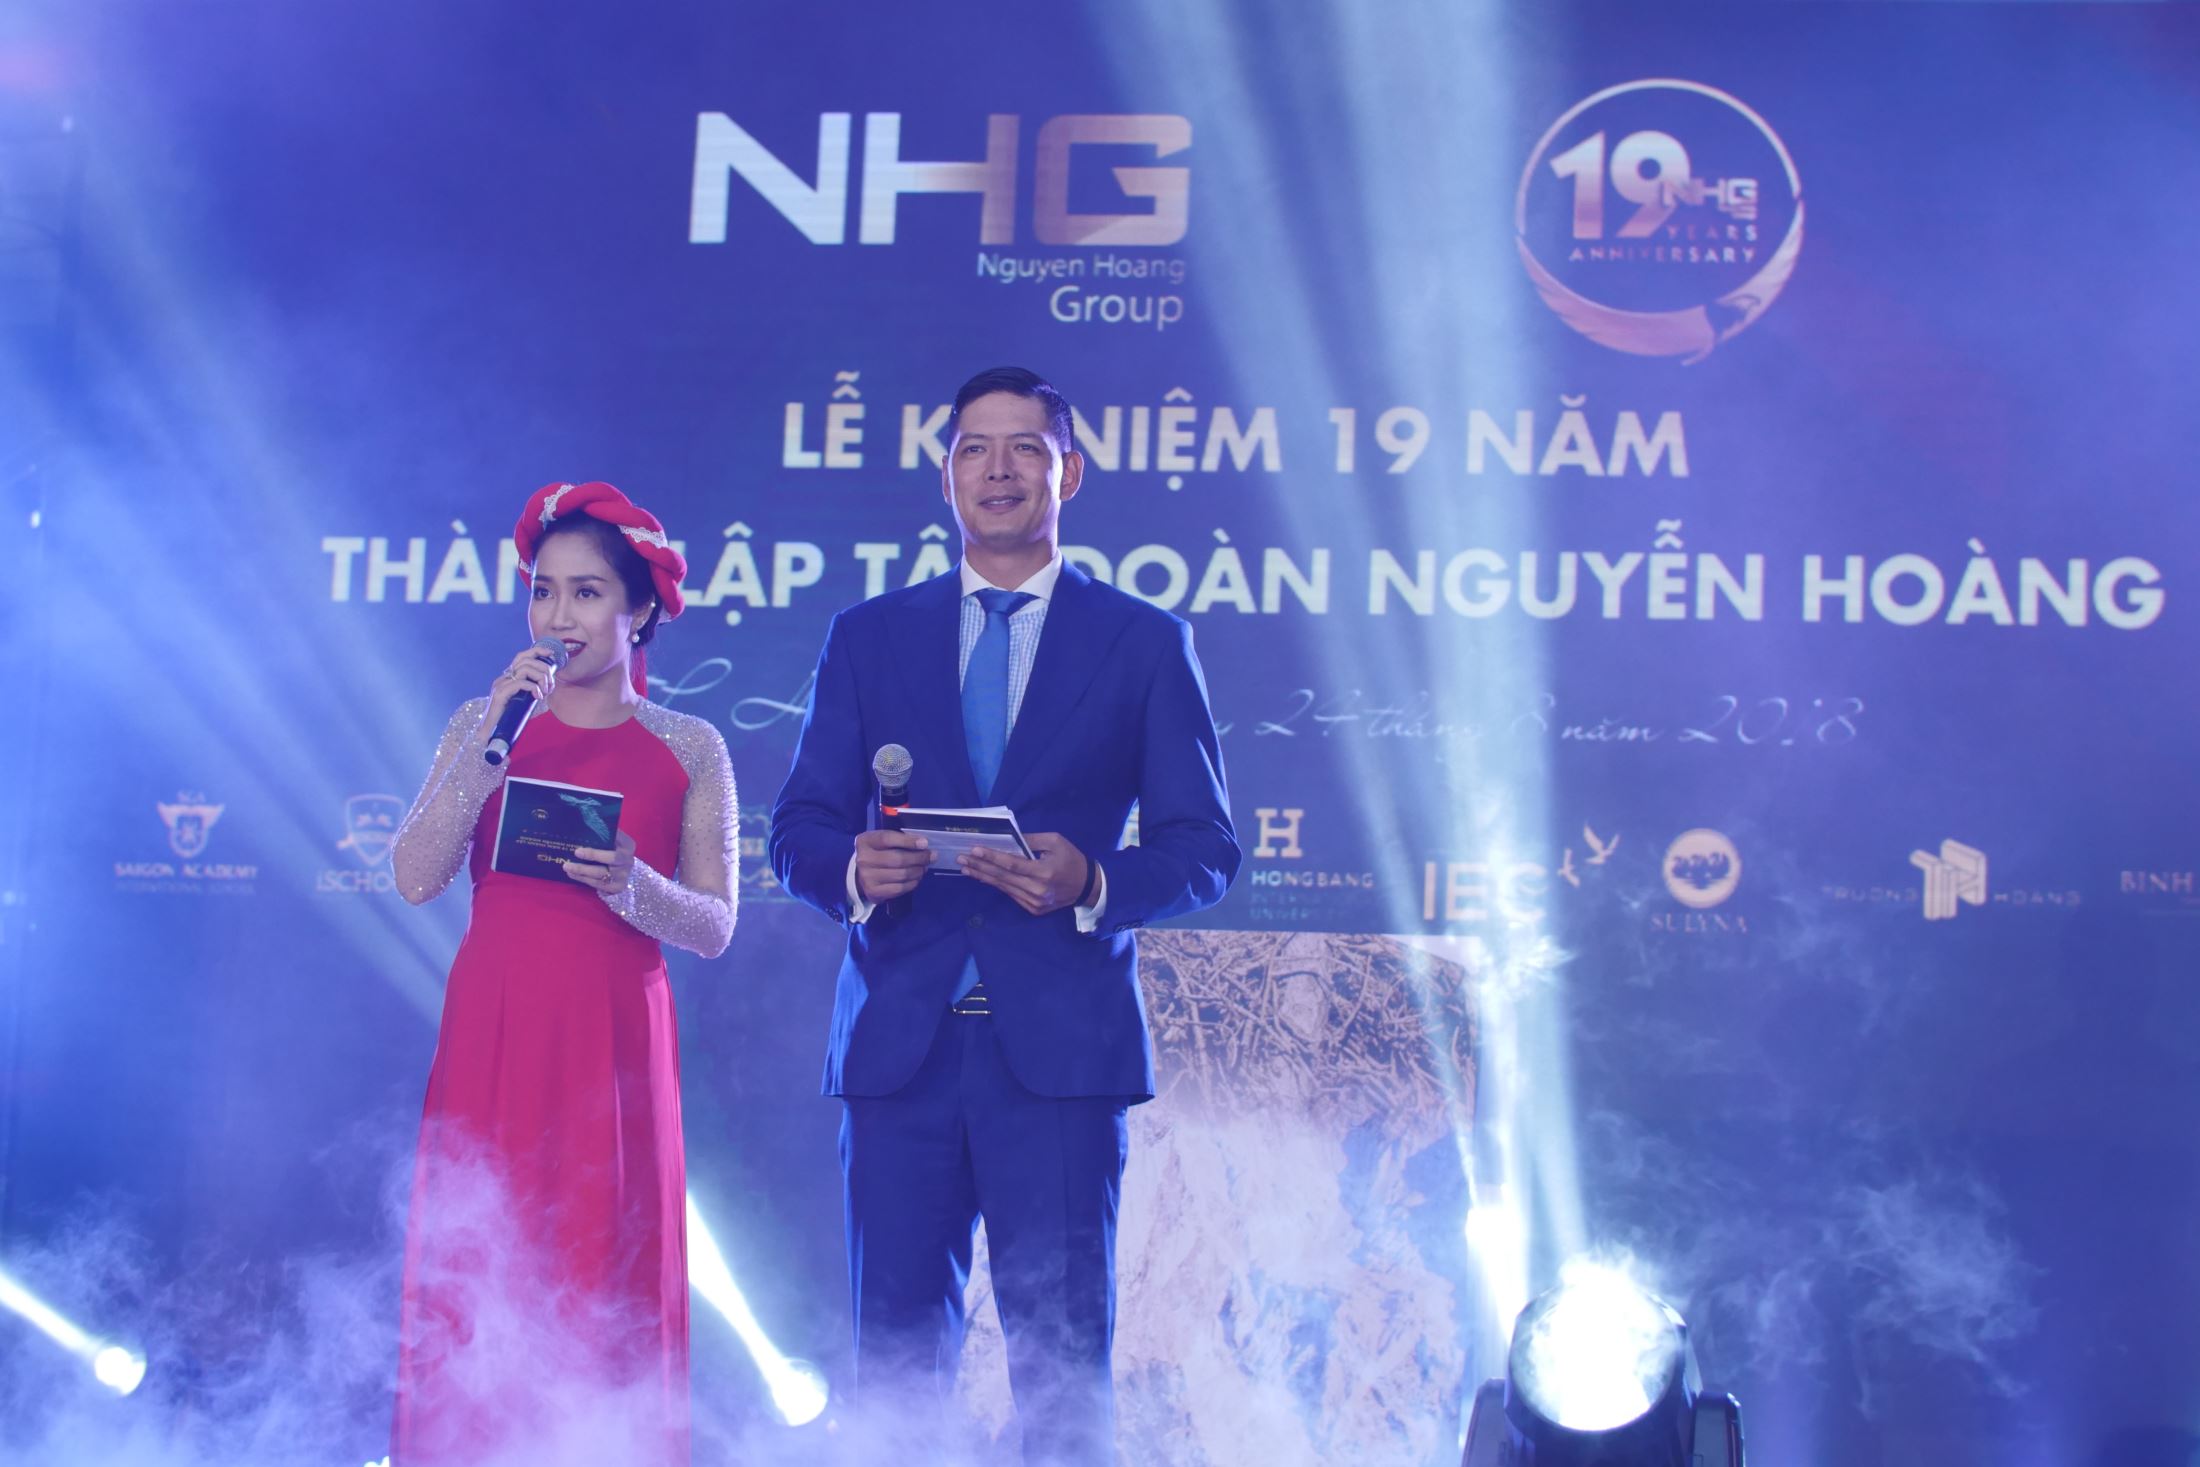 MC Binh Minh and Oc Thanh Van (parents of SNA) led NHG's 19th Anniversary.